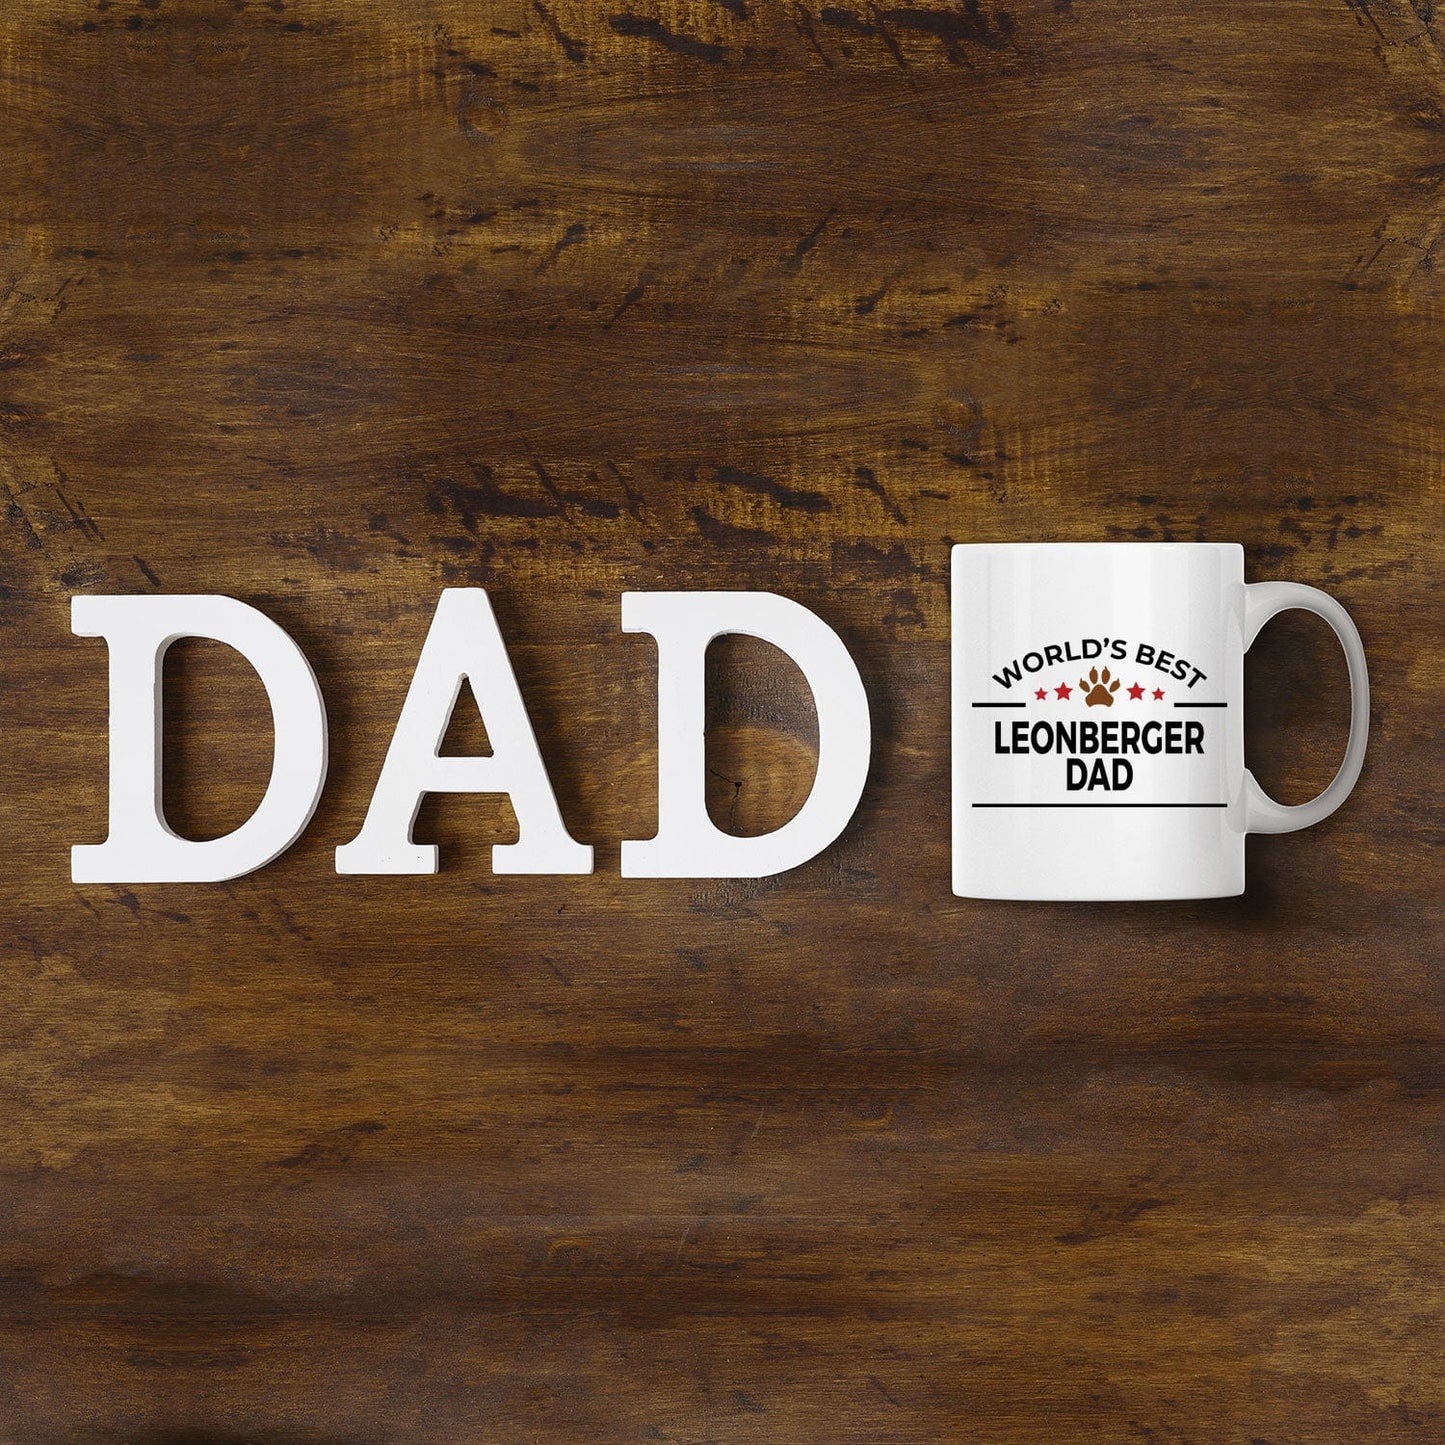 Leonberger Dog Dad Coffee Mug